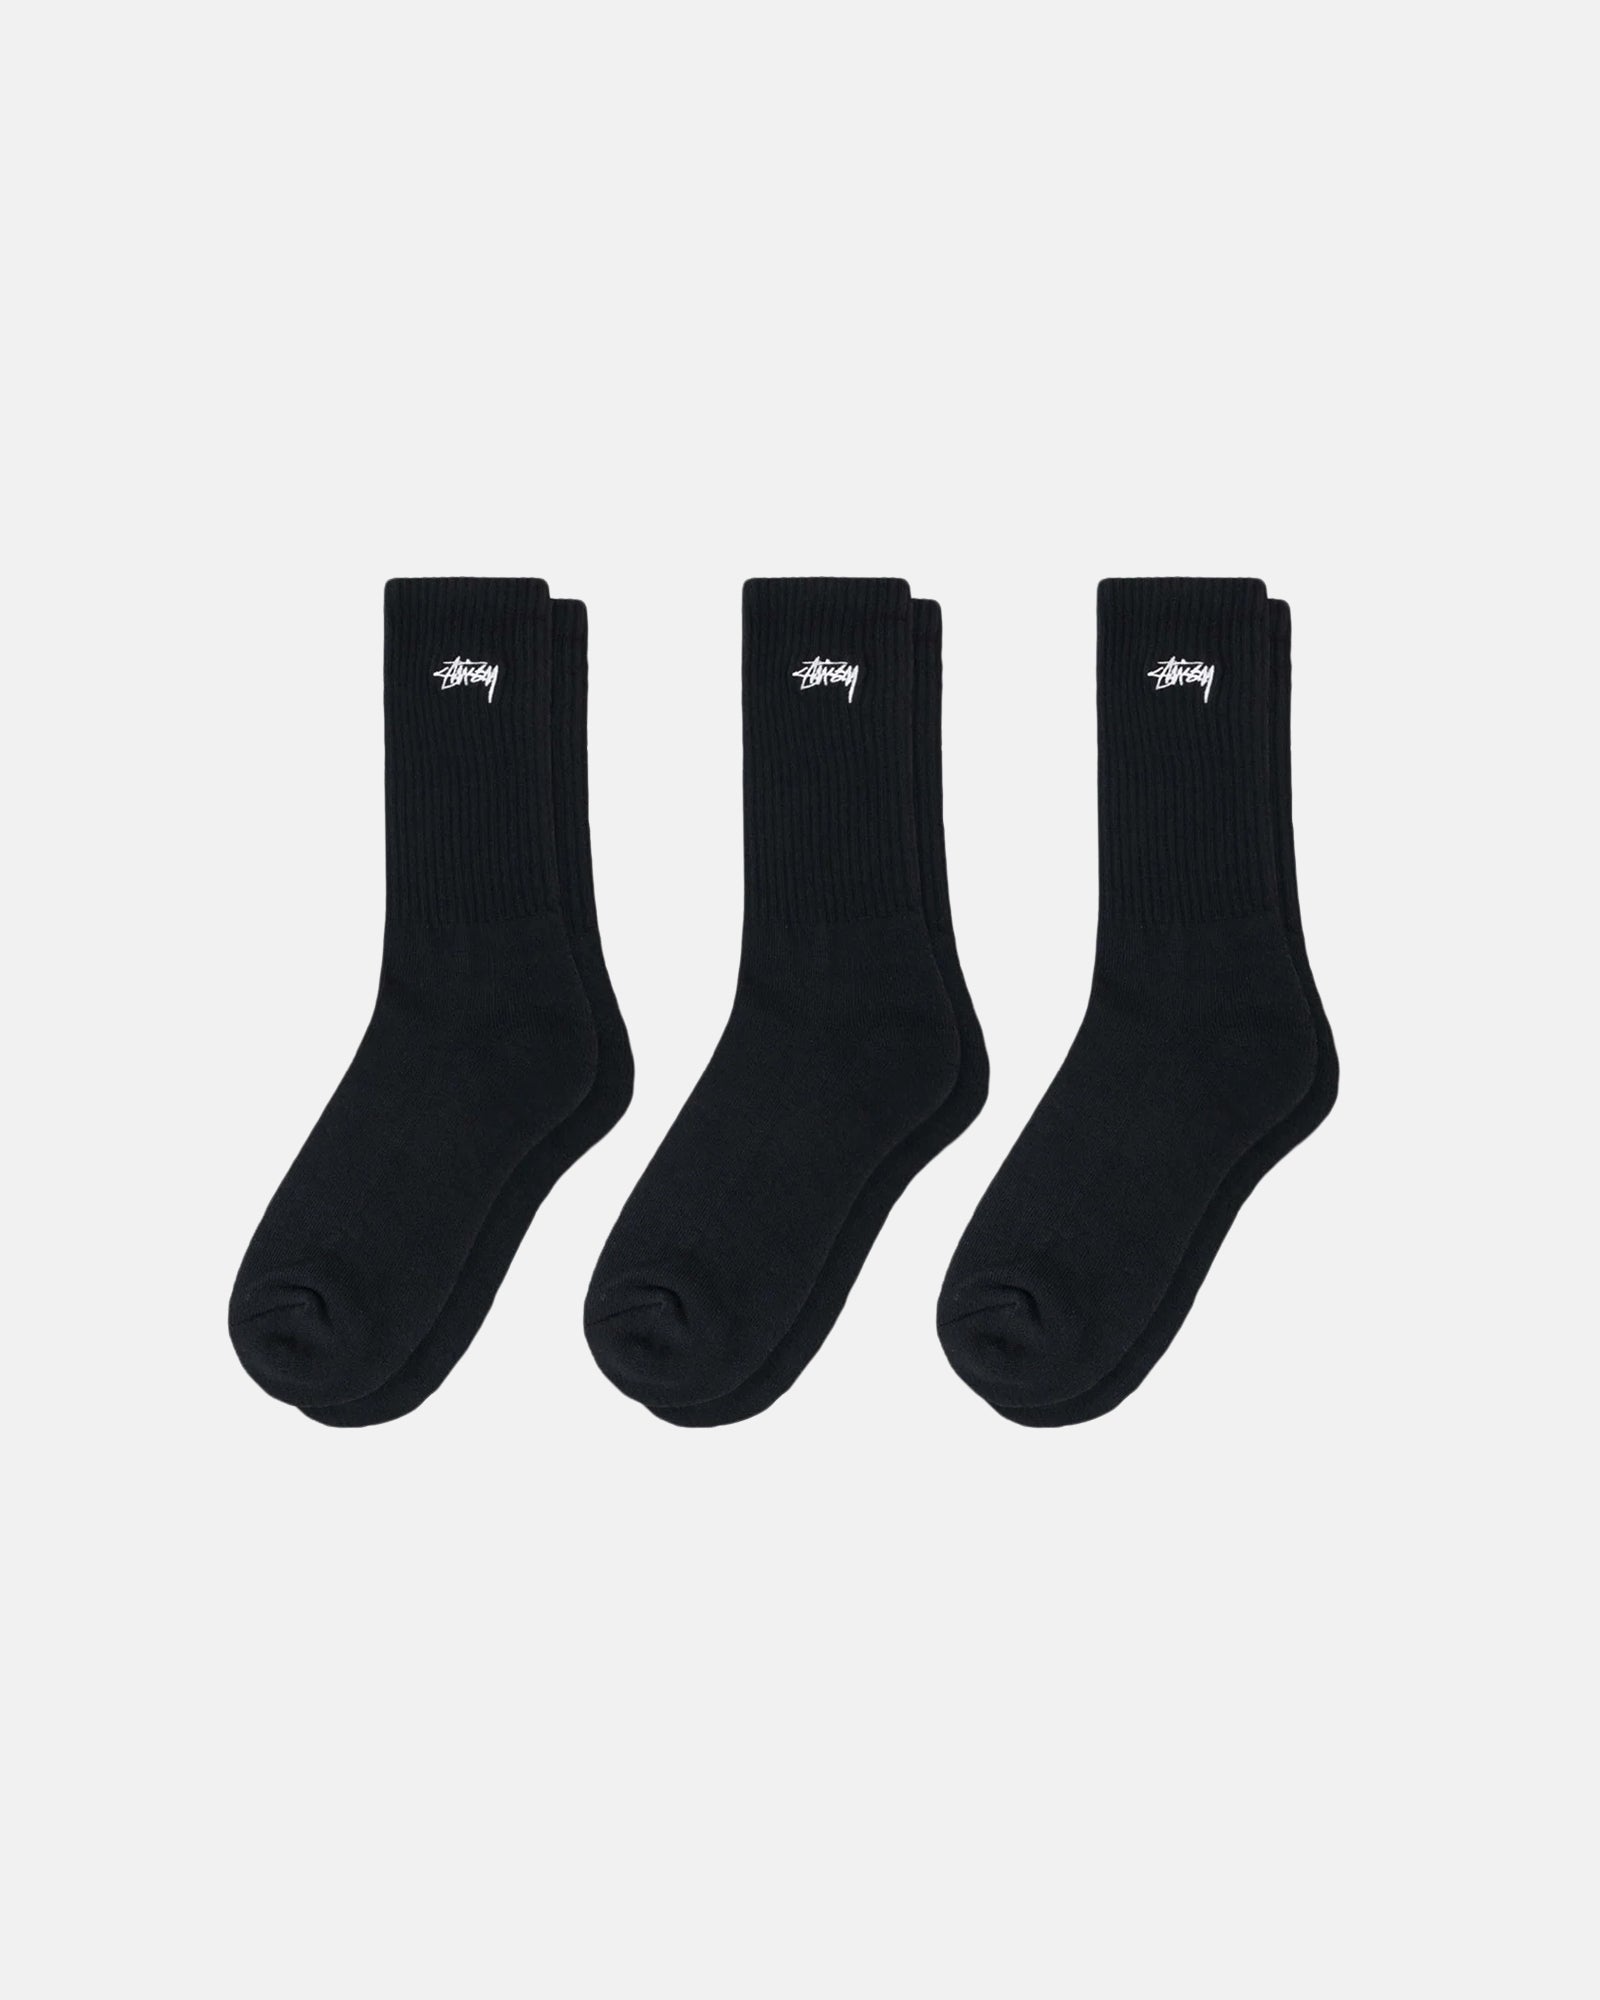 Stüssy Stock Crew Socks 3 Pack Black Accessories